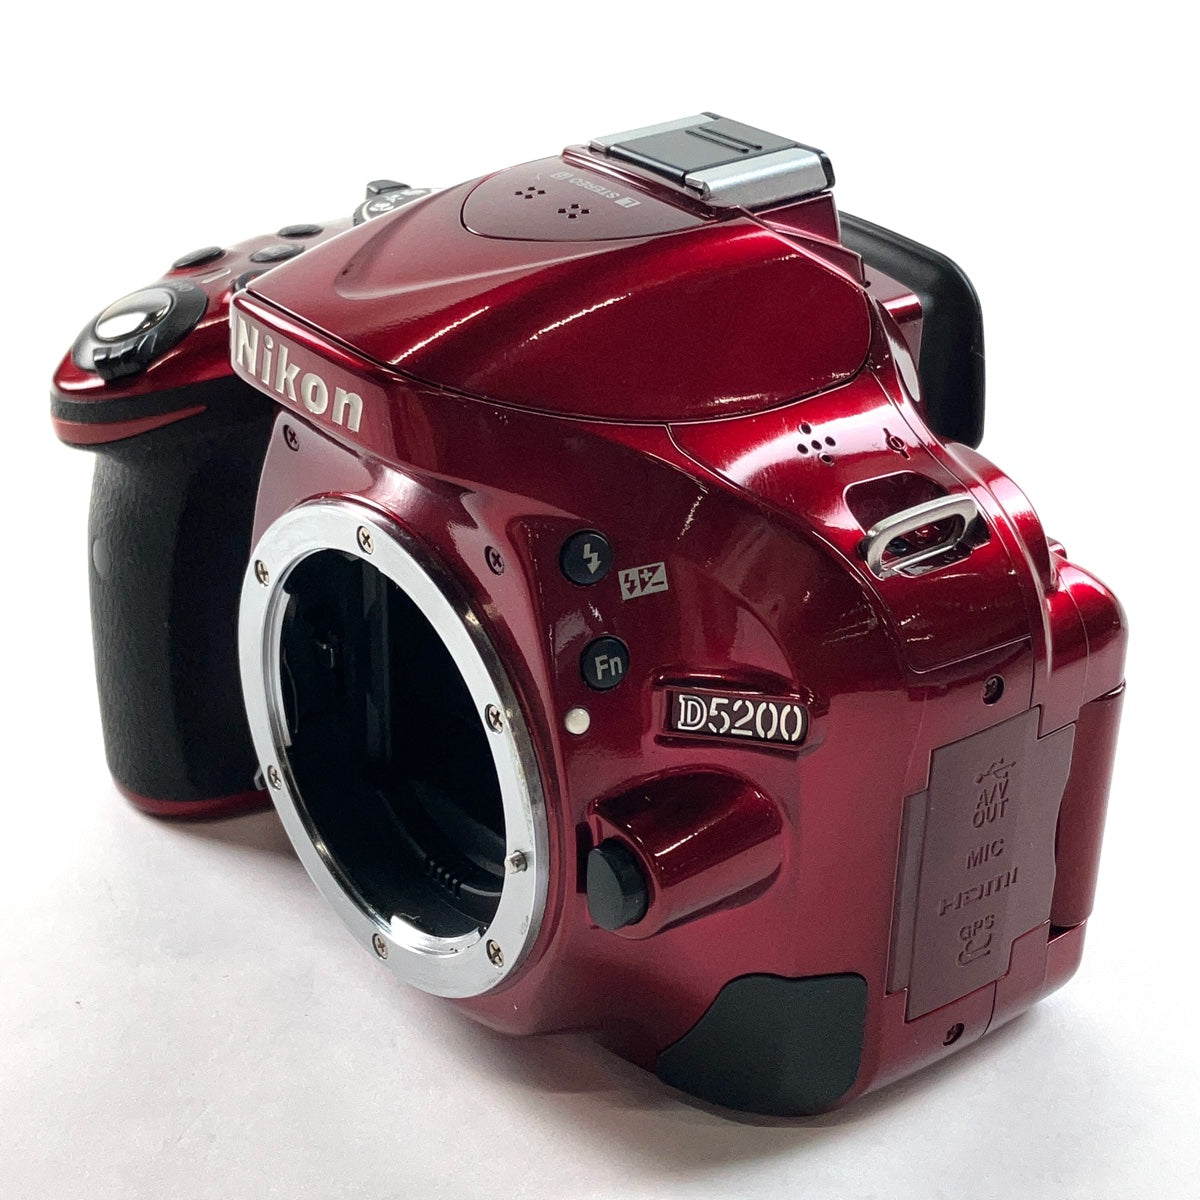 Nikon デジタル一眼レフカメラ D5200 ボディー ブラック D5200BK